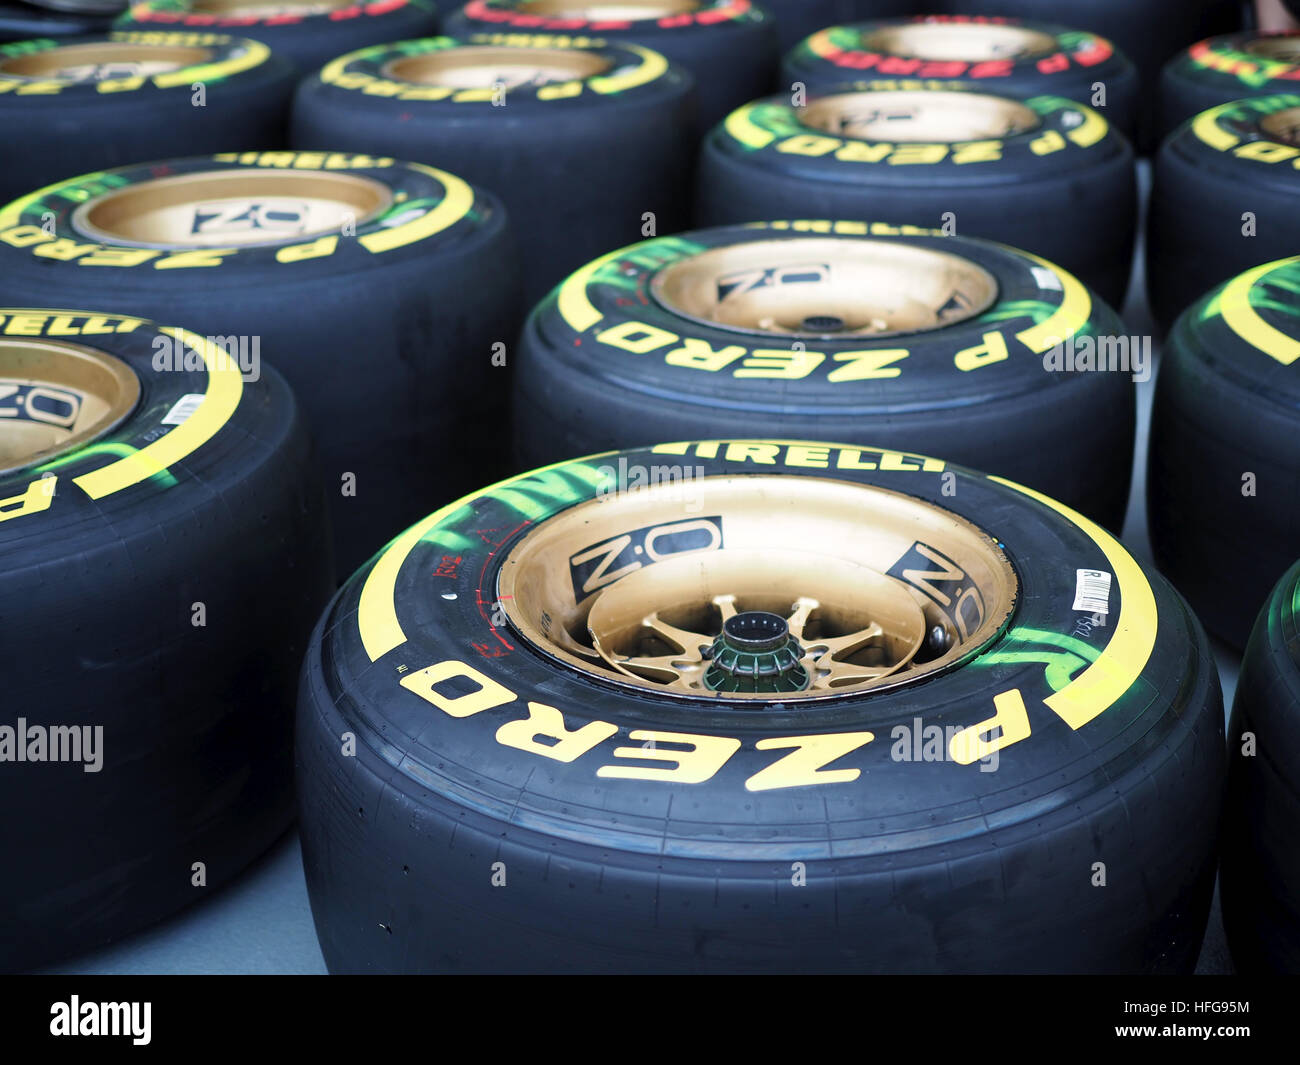 Formula One F1 grand prix racing motor sport P Zero tires wheels gold  Pirelli Stock Photo - Alamy